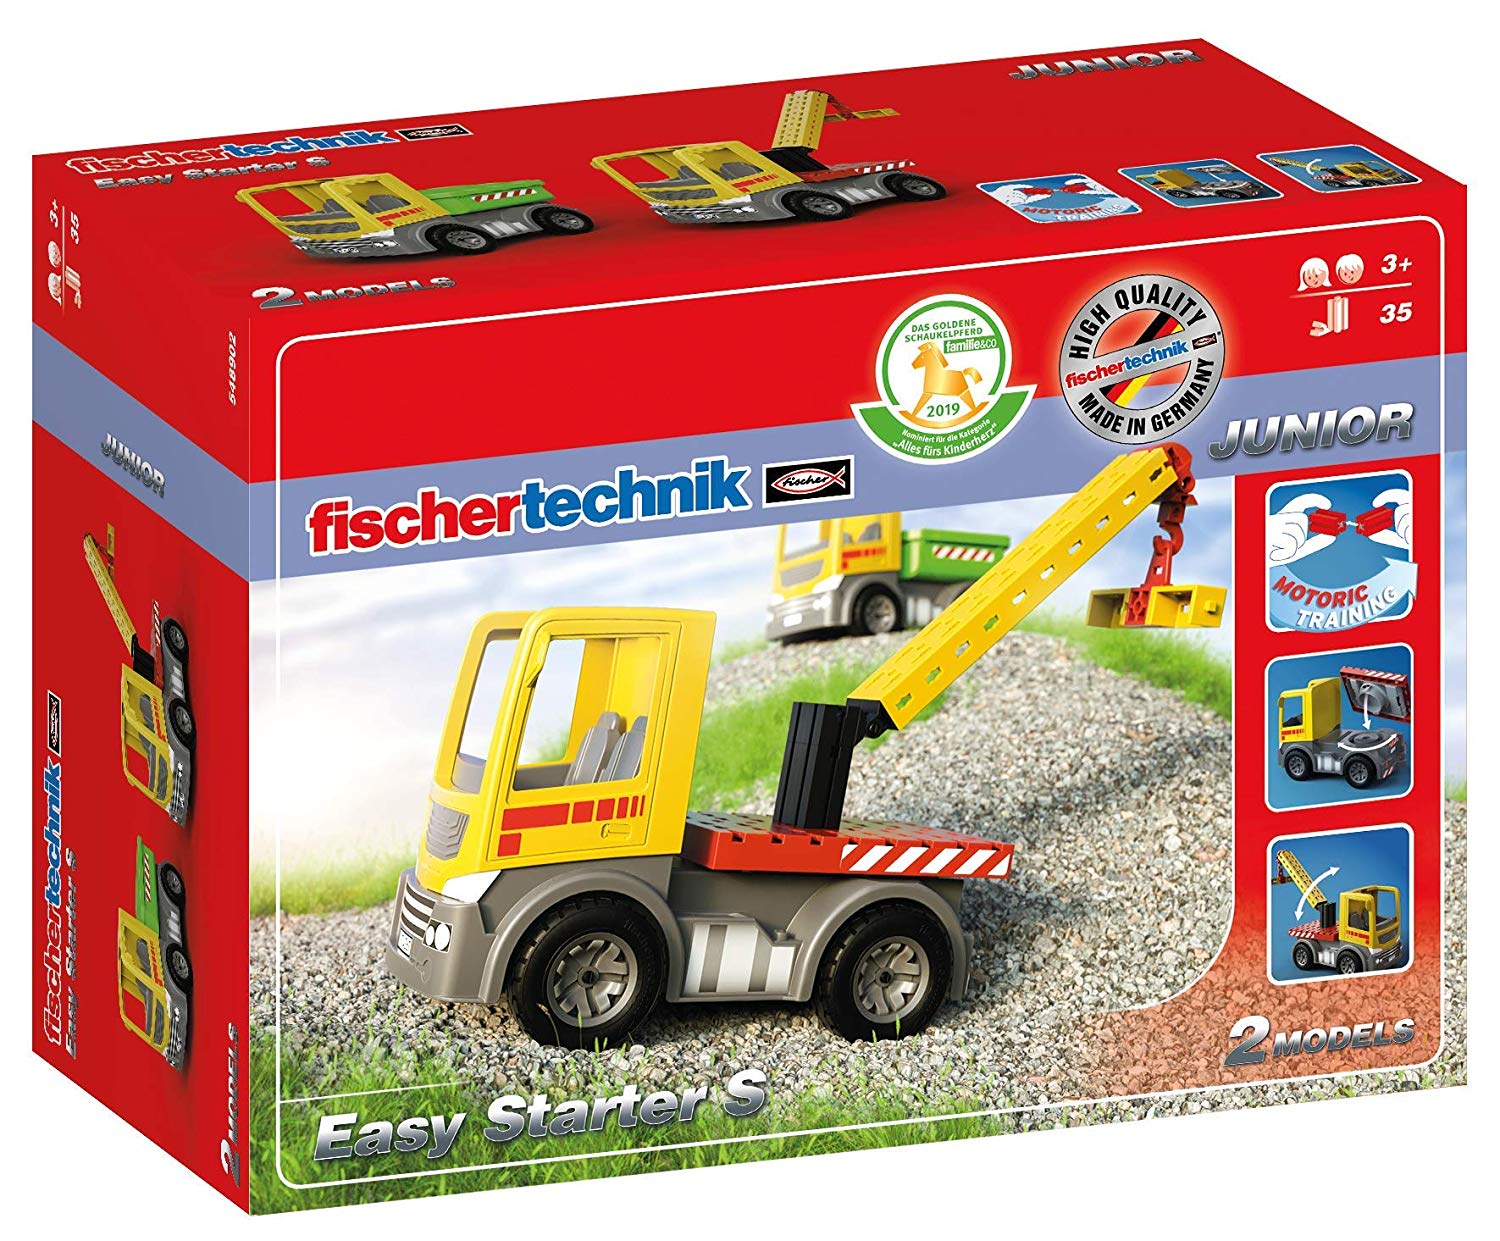 Fischertechnik 548902 Construction Kit Assorted